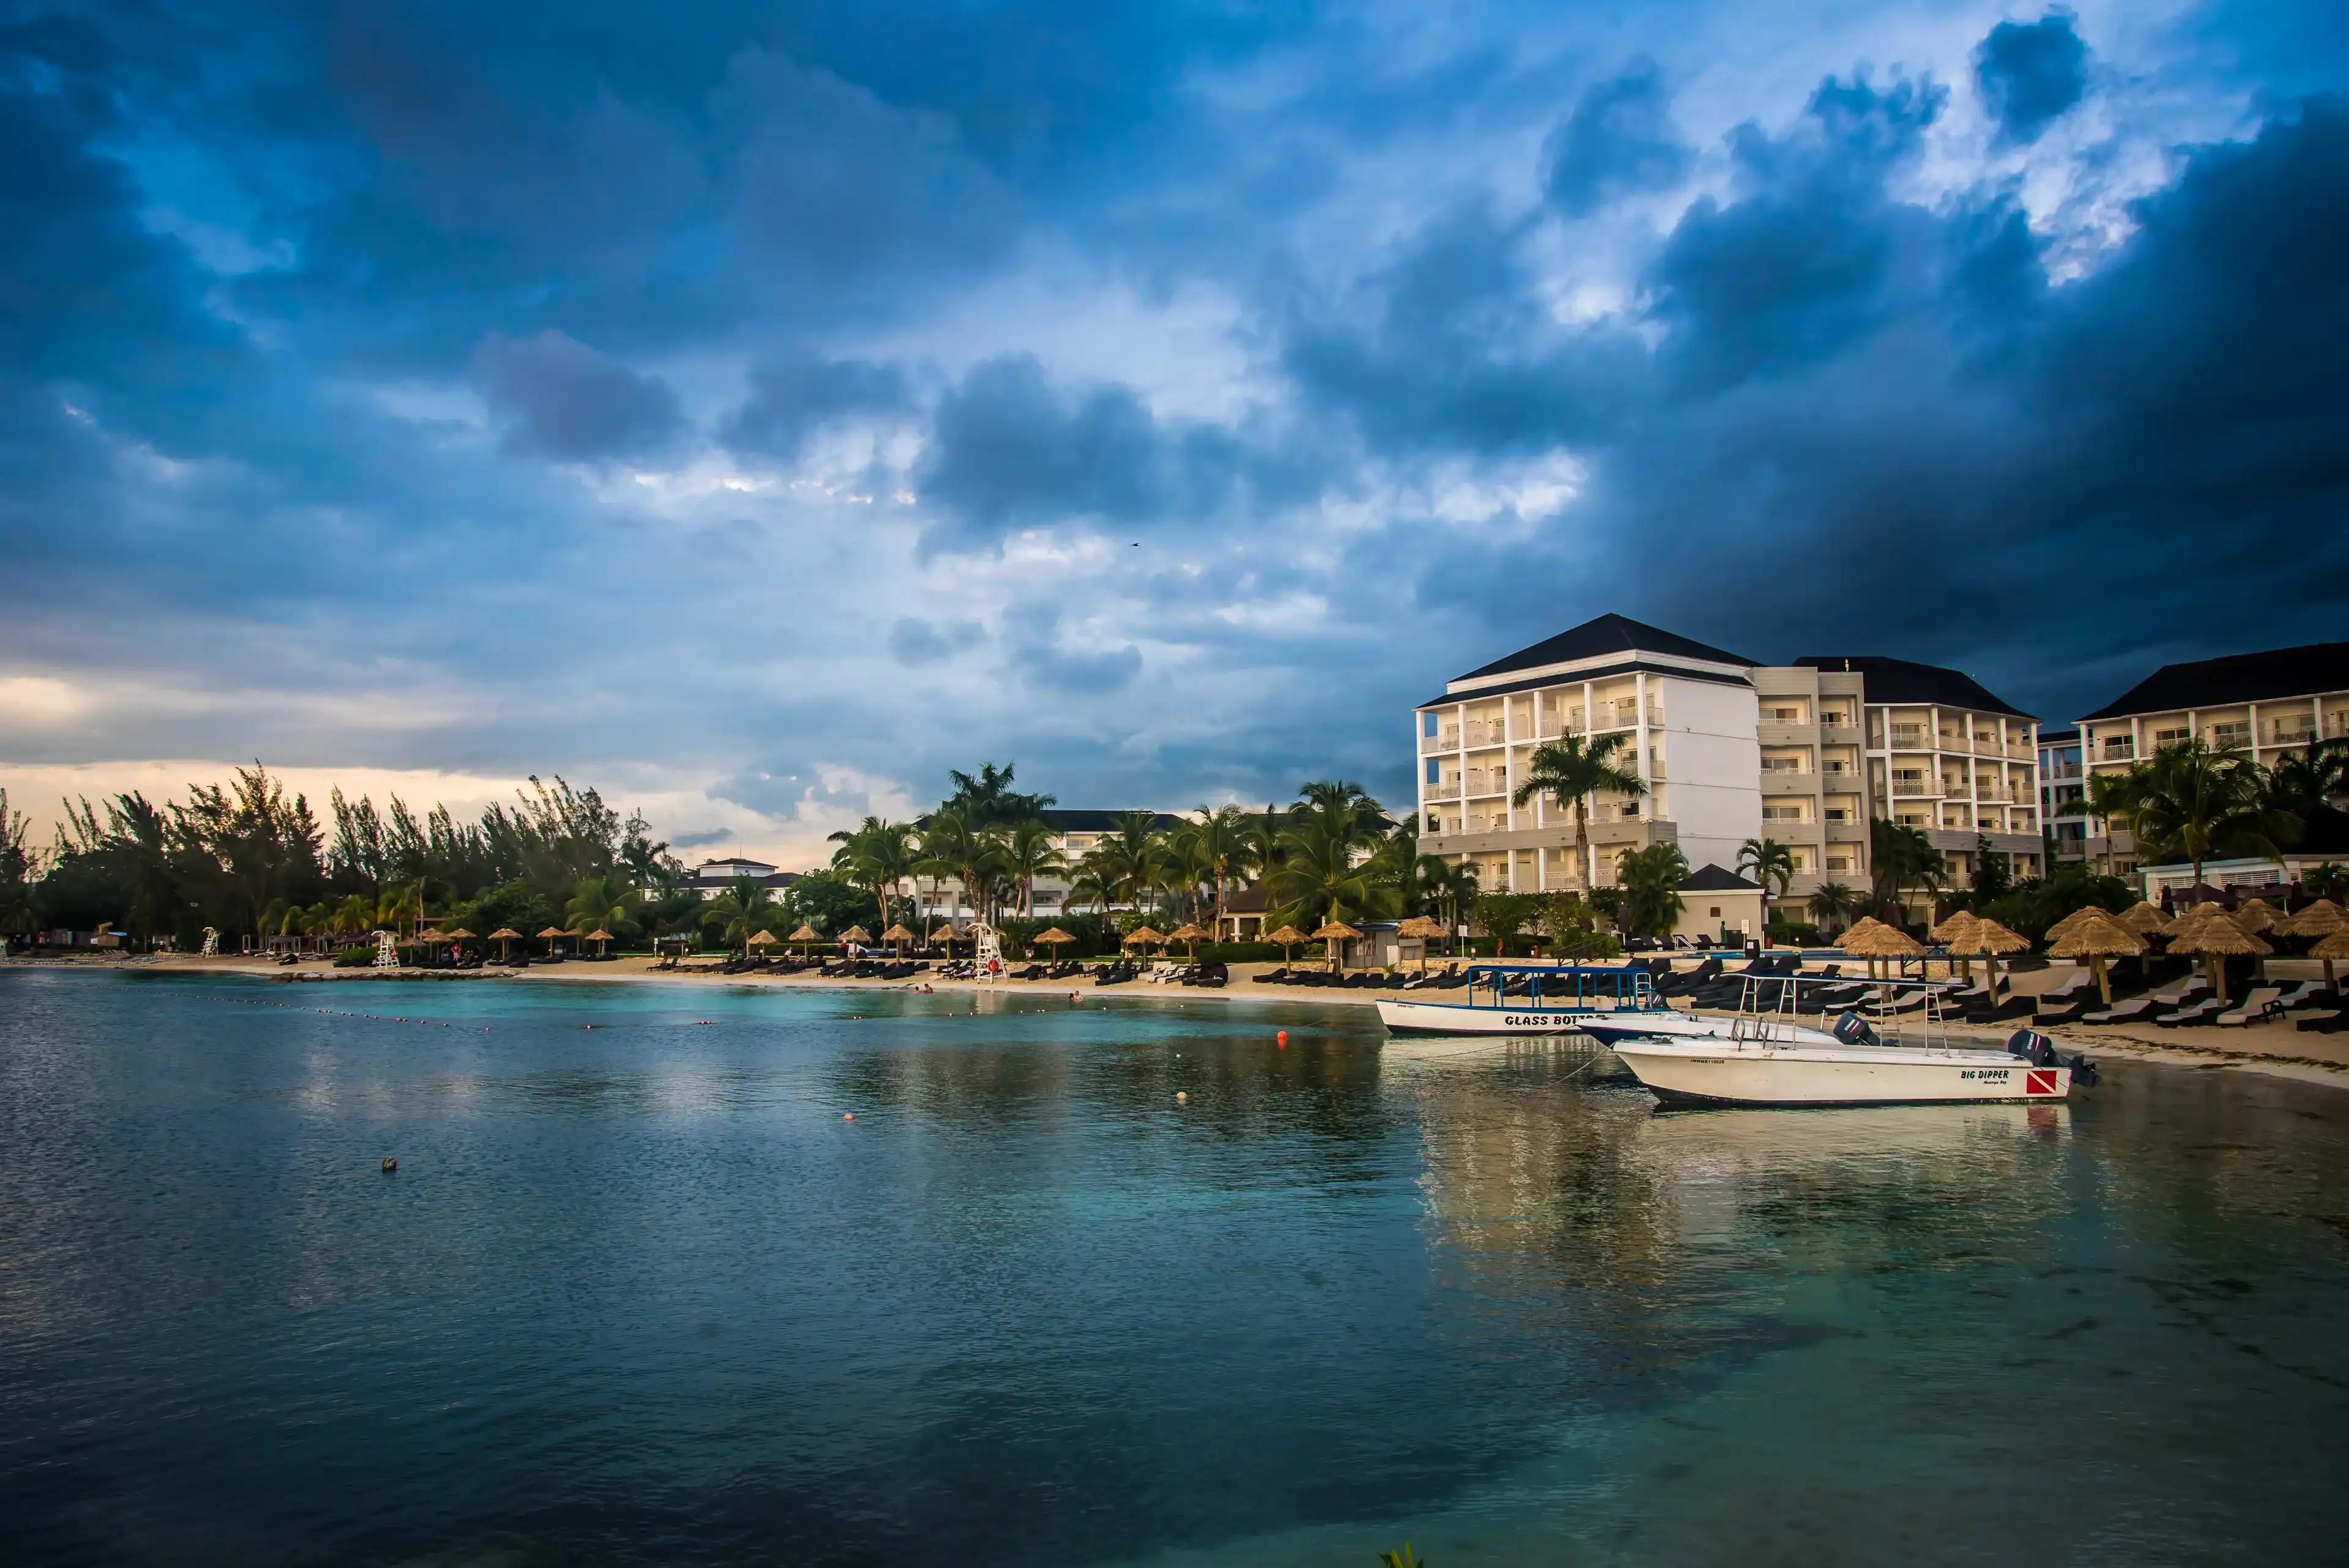 Best Montego Bay hotels. Cheap hotels in Montego Bay, Jamaica